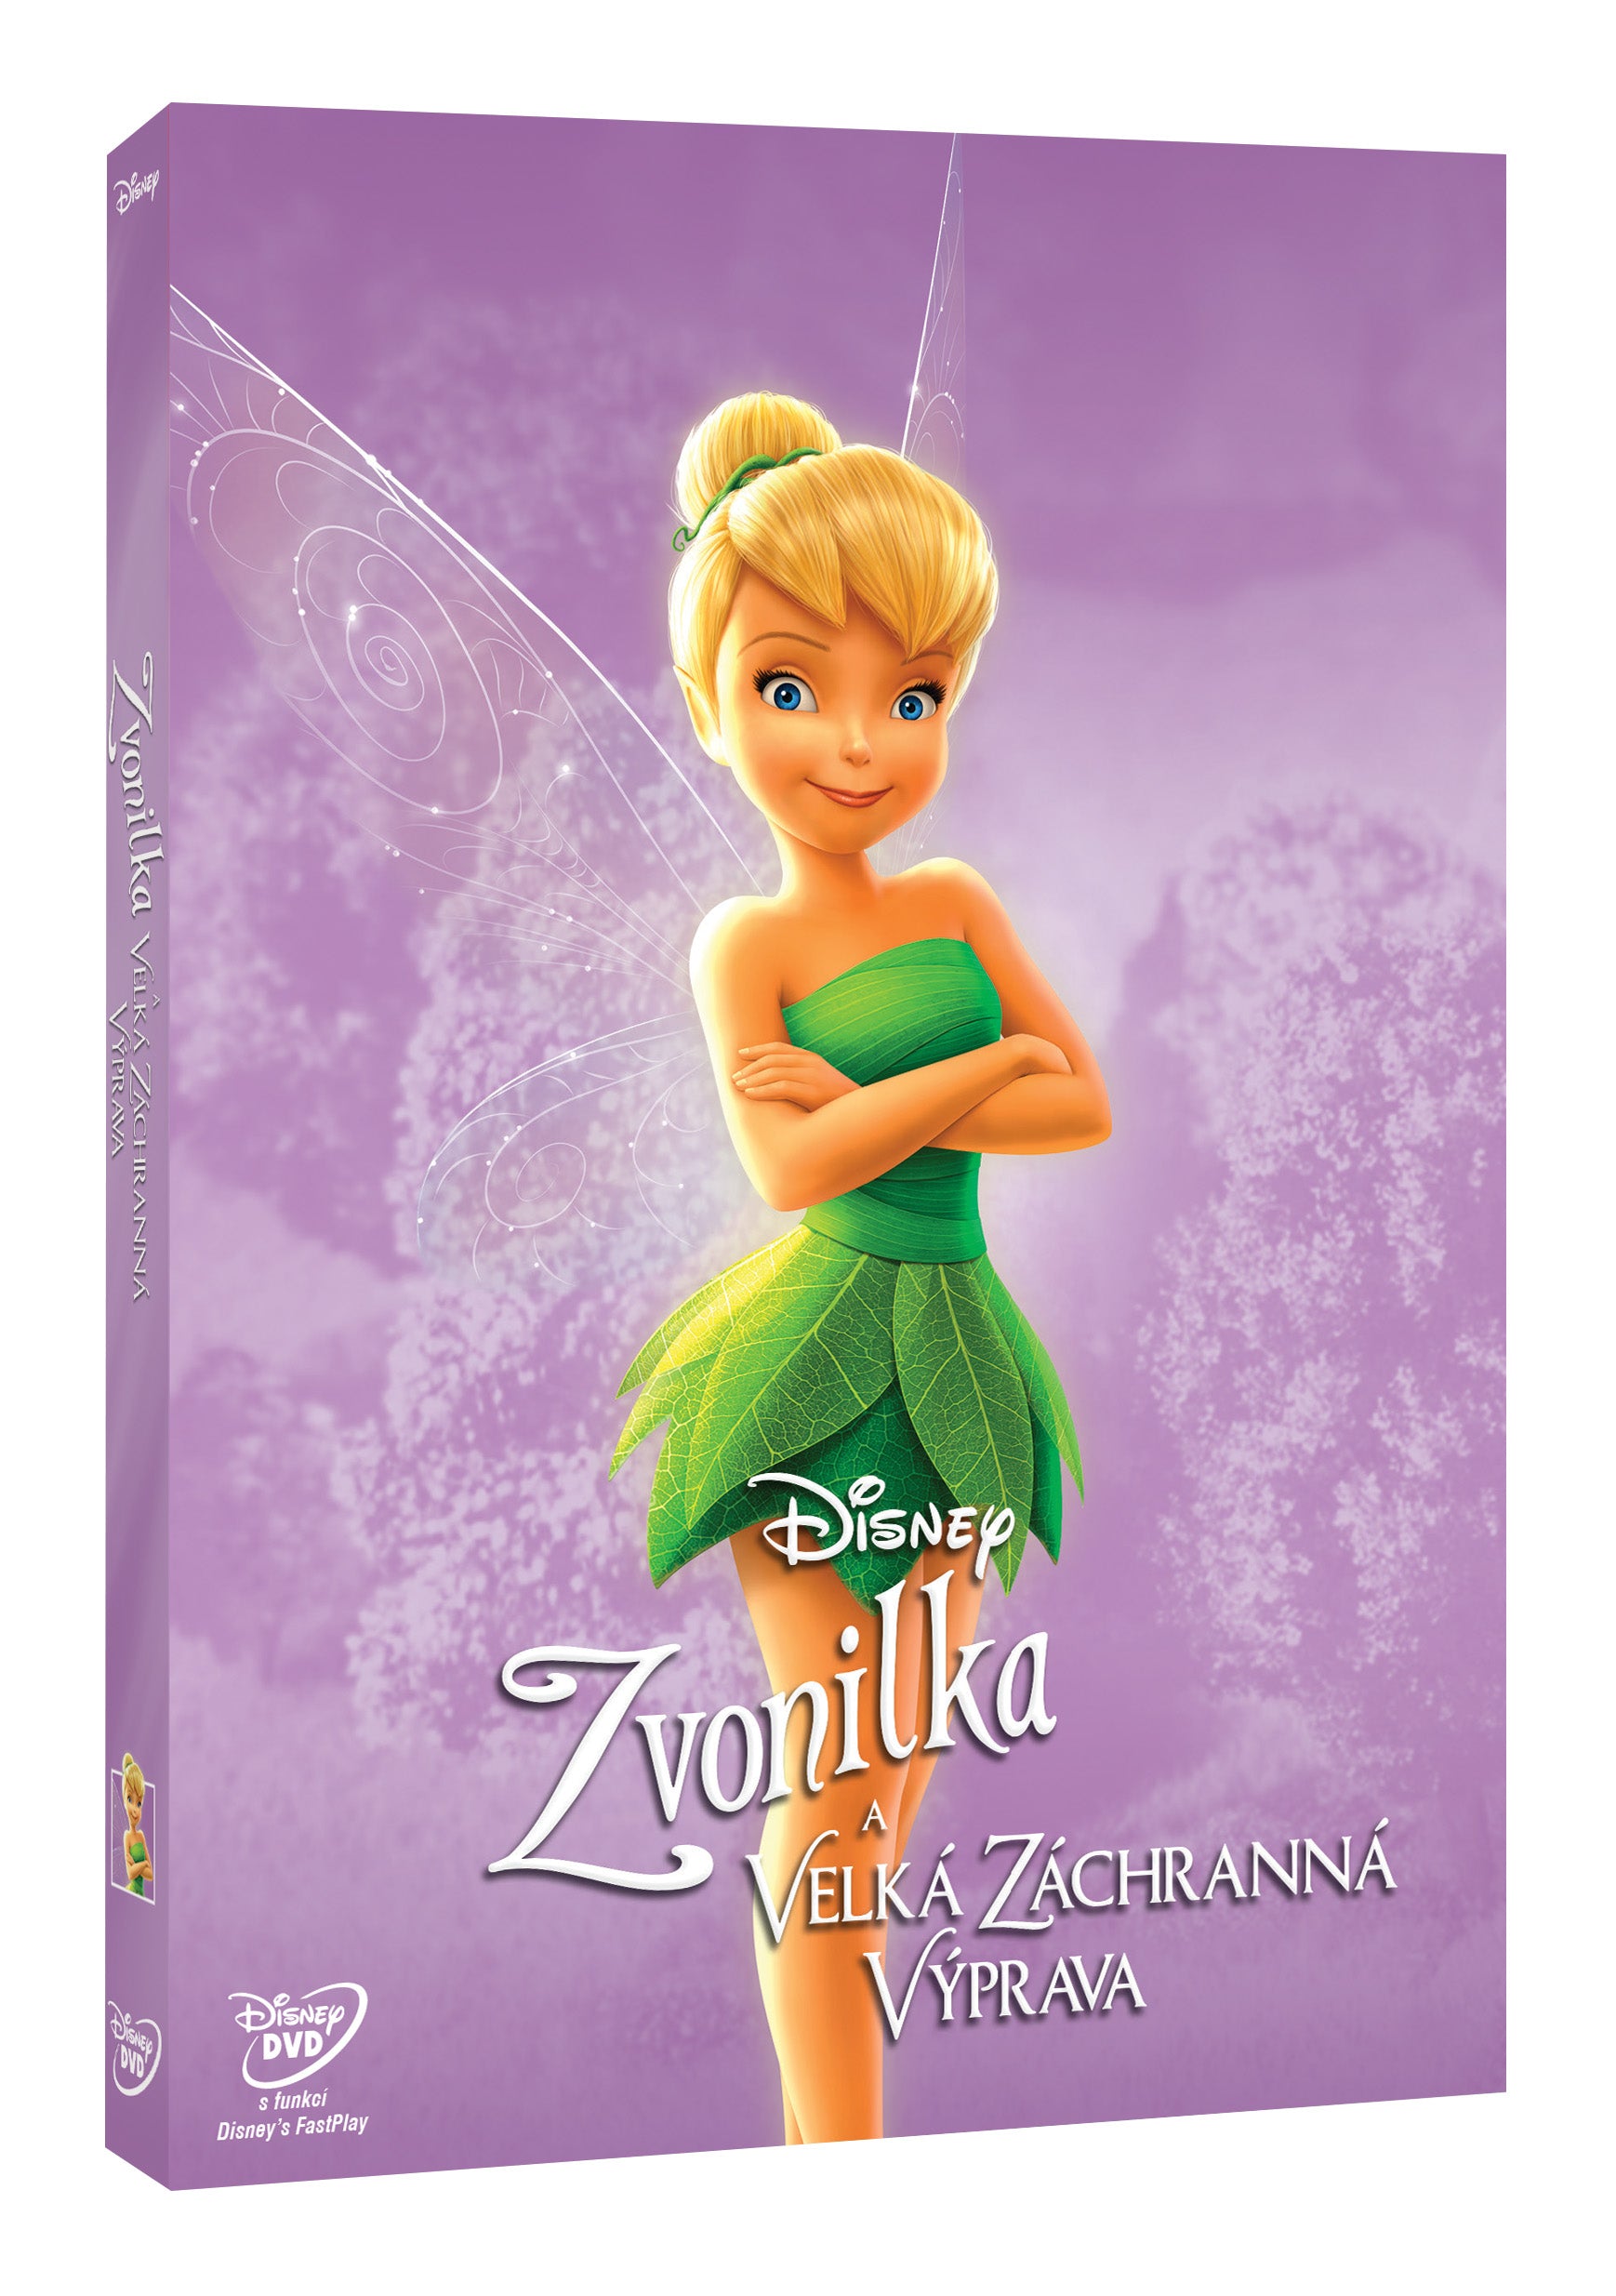 Zvonilka a velka zachranna vyprava - Edice Disney Vily (Tinker Bell and the Great Fairy Rescue)